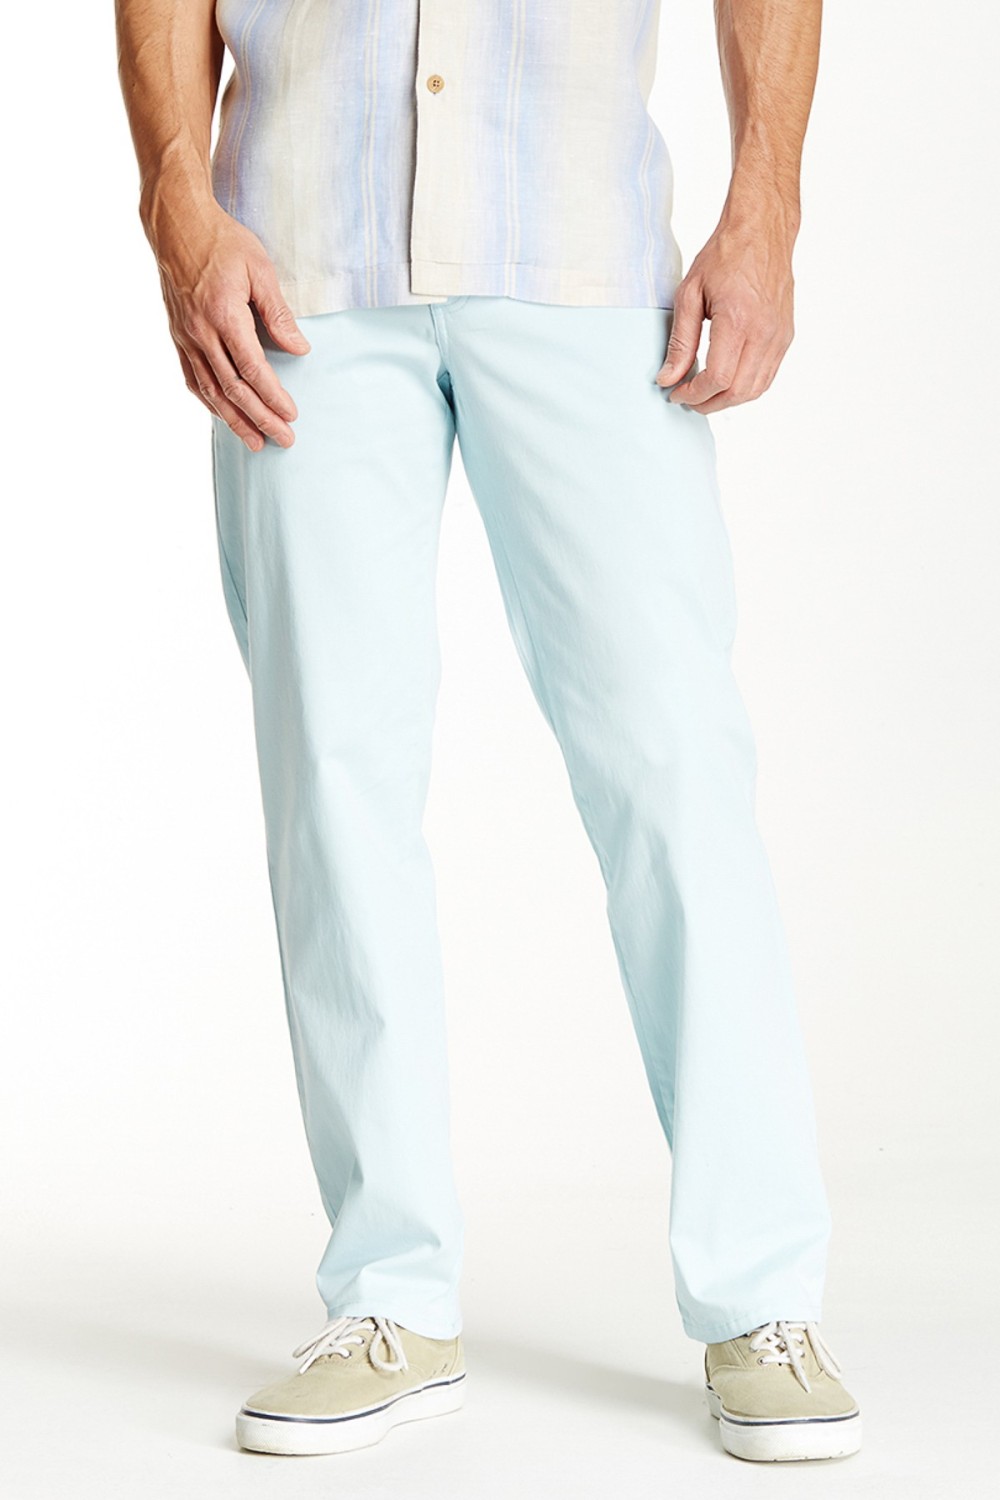 Tommy Bahama Slim Straight Pant - Size 32W / 33L